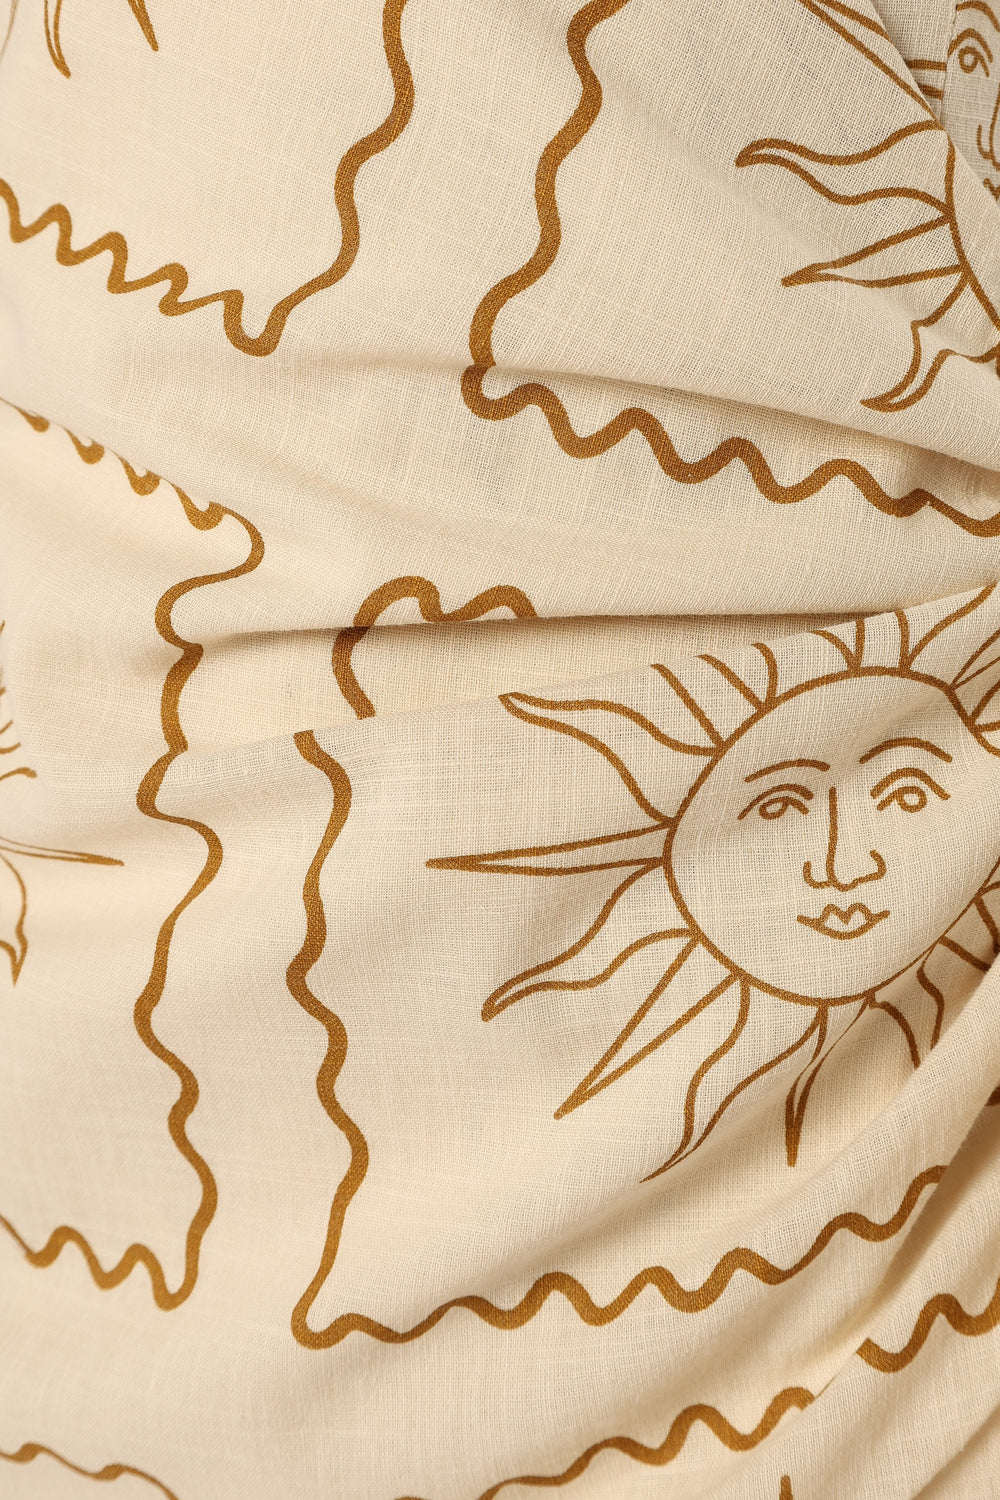 DRESSES @Myla Wrap Mini Dress - Sun Print